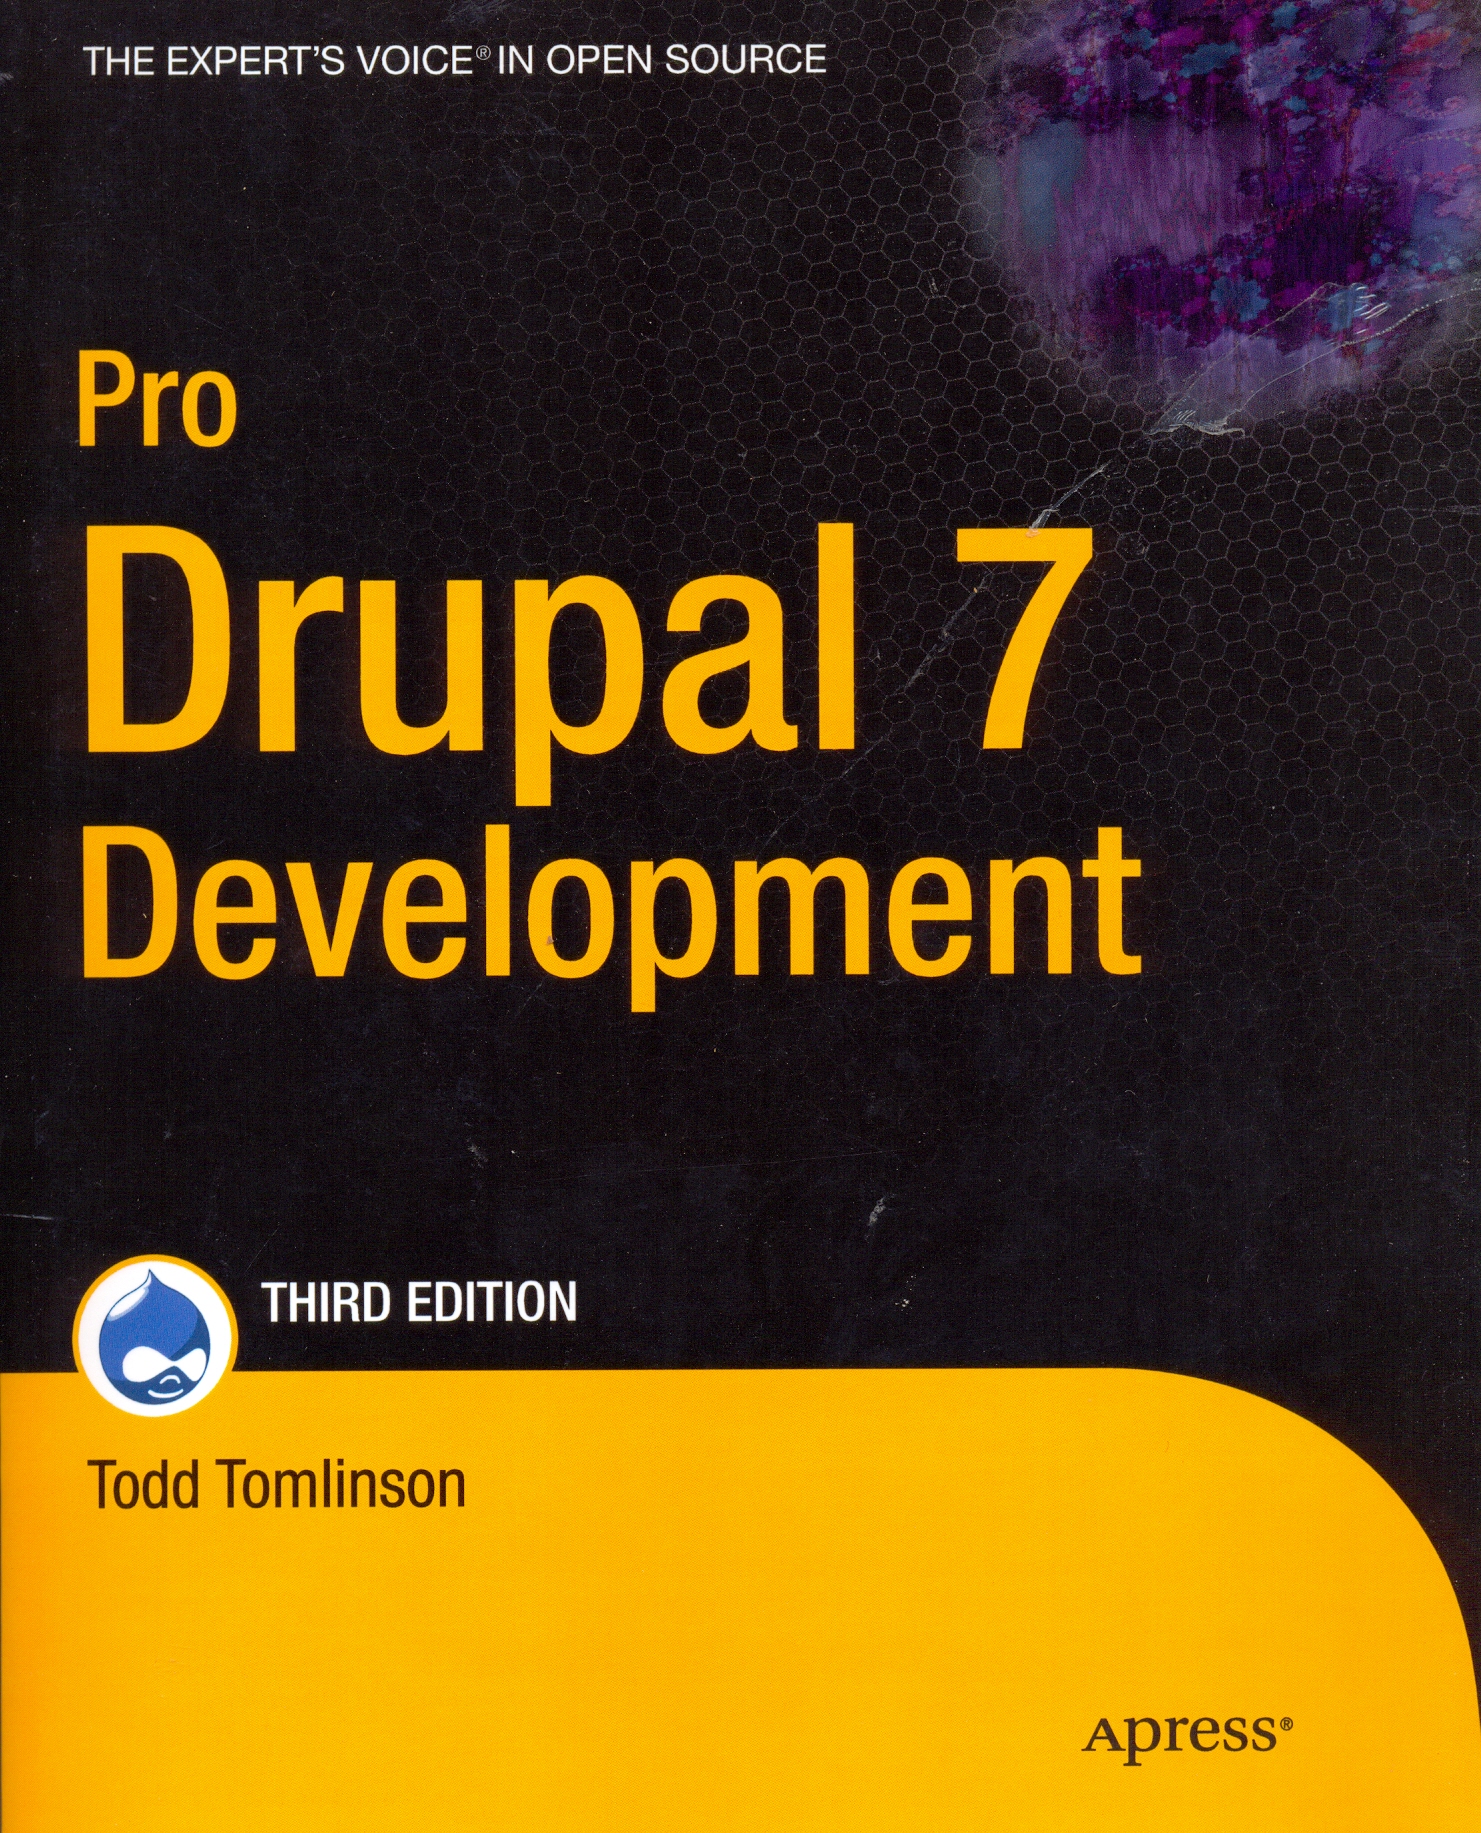 Pro Drupal 7 Development 